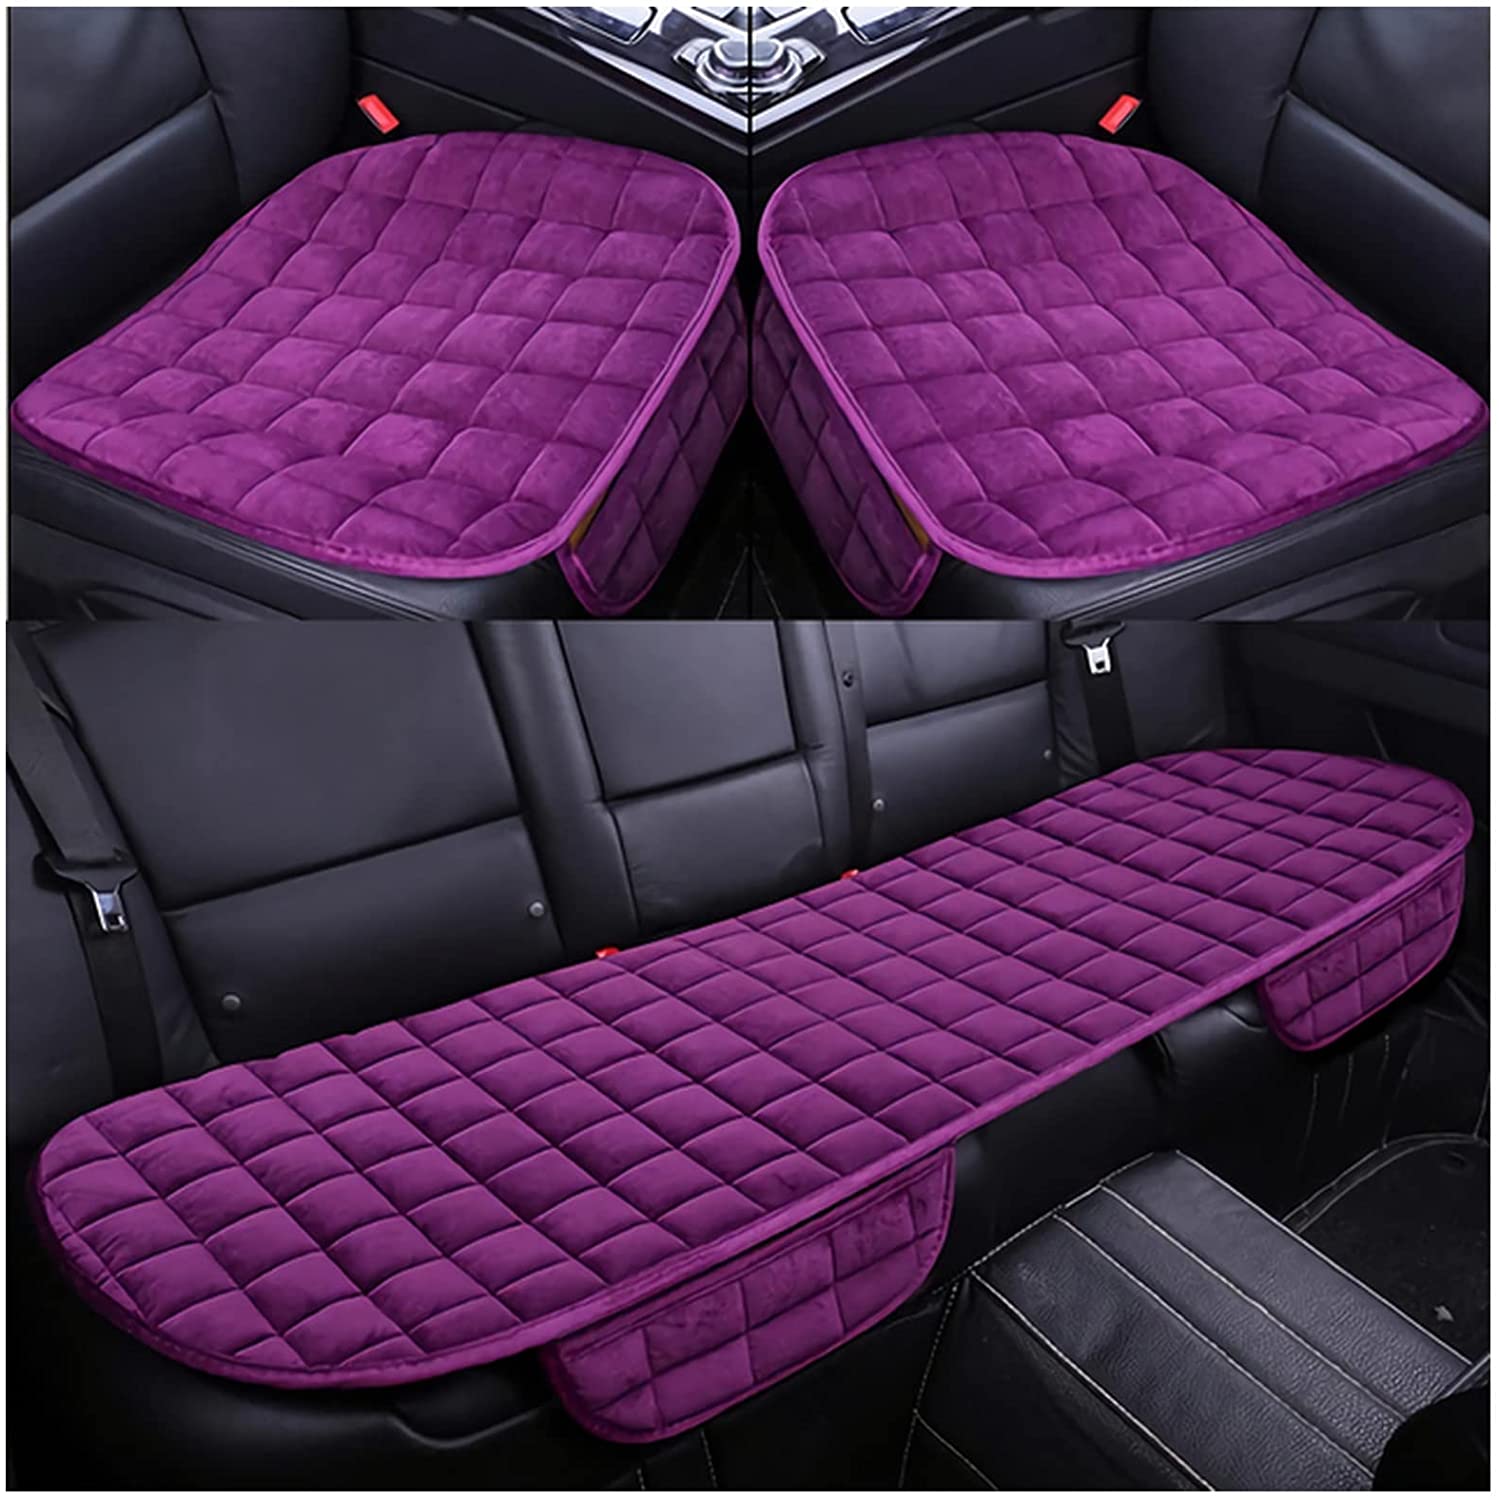 bamutech Seat Cushion Car Seat Cover Fit Truck SUV Van Front Rear Flake Cloth Cushion Non-Slip Winter Car Protector Mat Pad Keep Warm Universal Seat Cushion Chair (Size: Purple 3pcs)